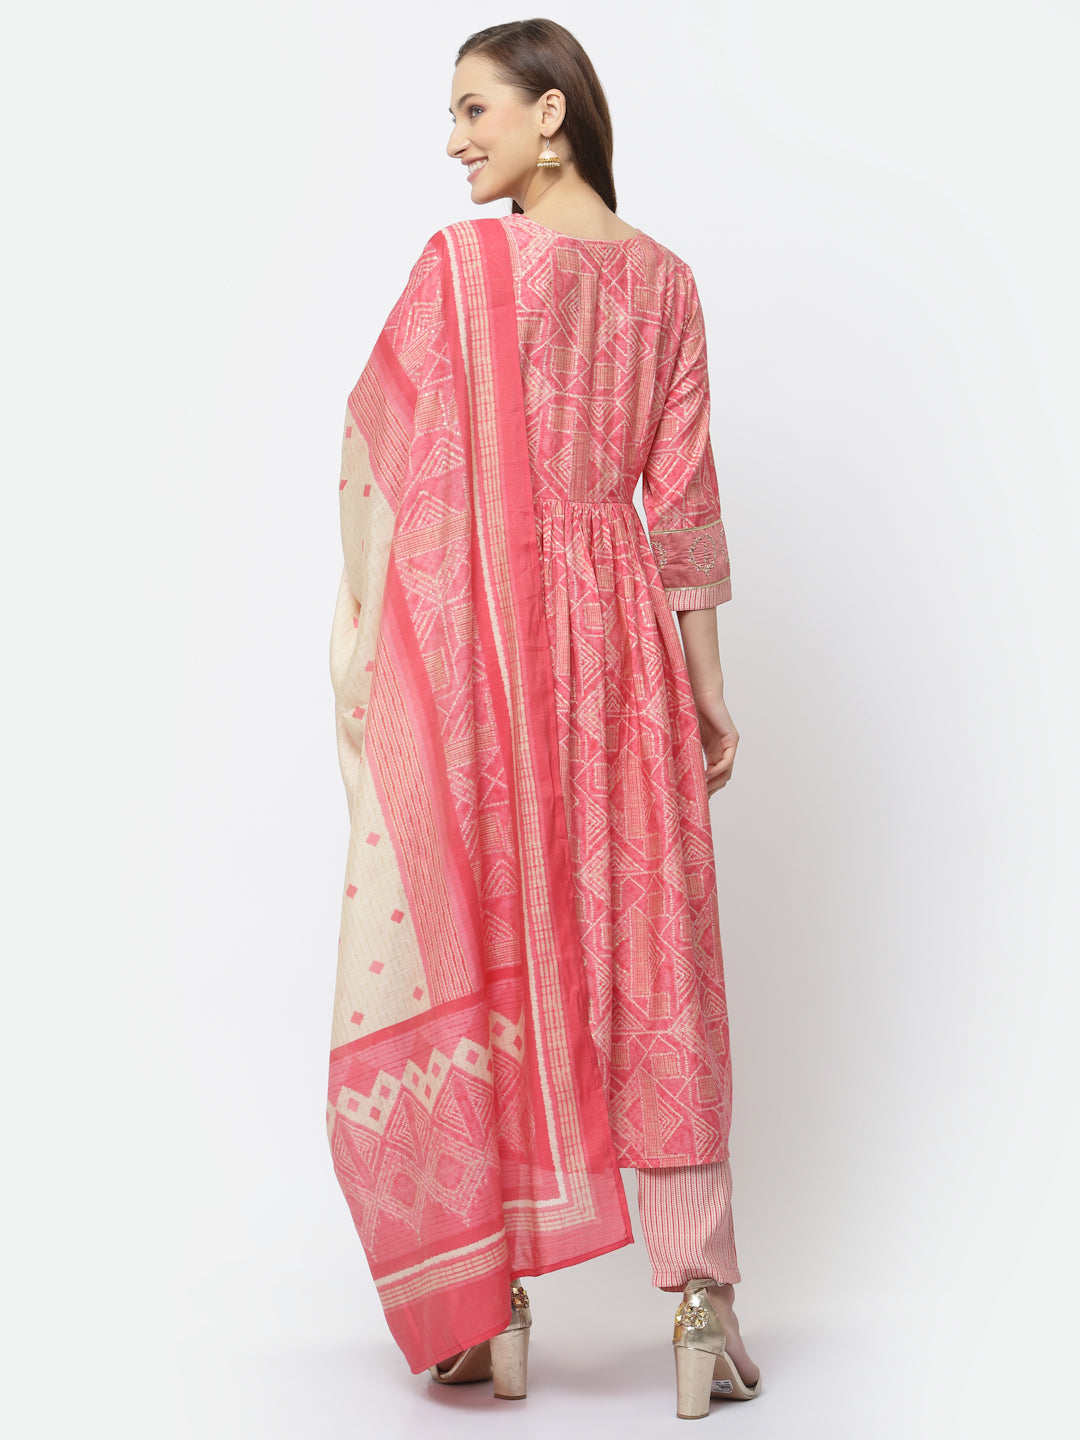 Pastel Red Foil Printed Chanderi Silk Kurta Set with Embroidery - ARH1433P